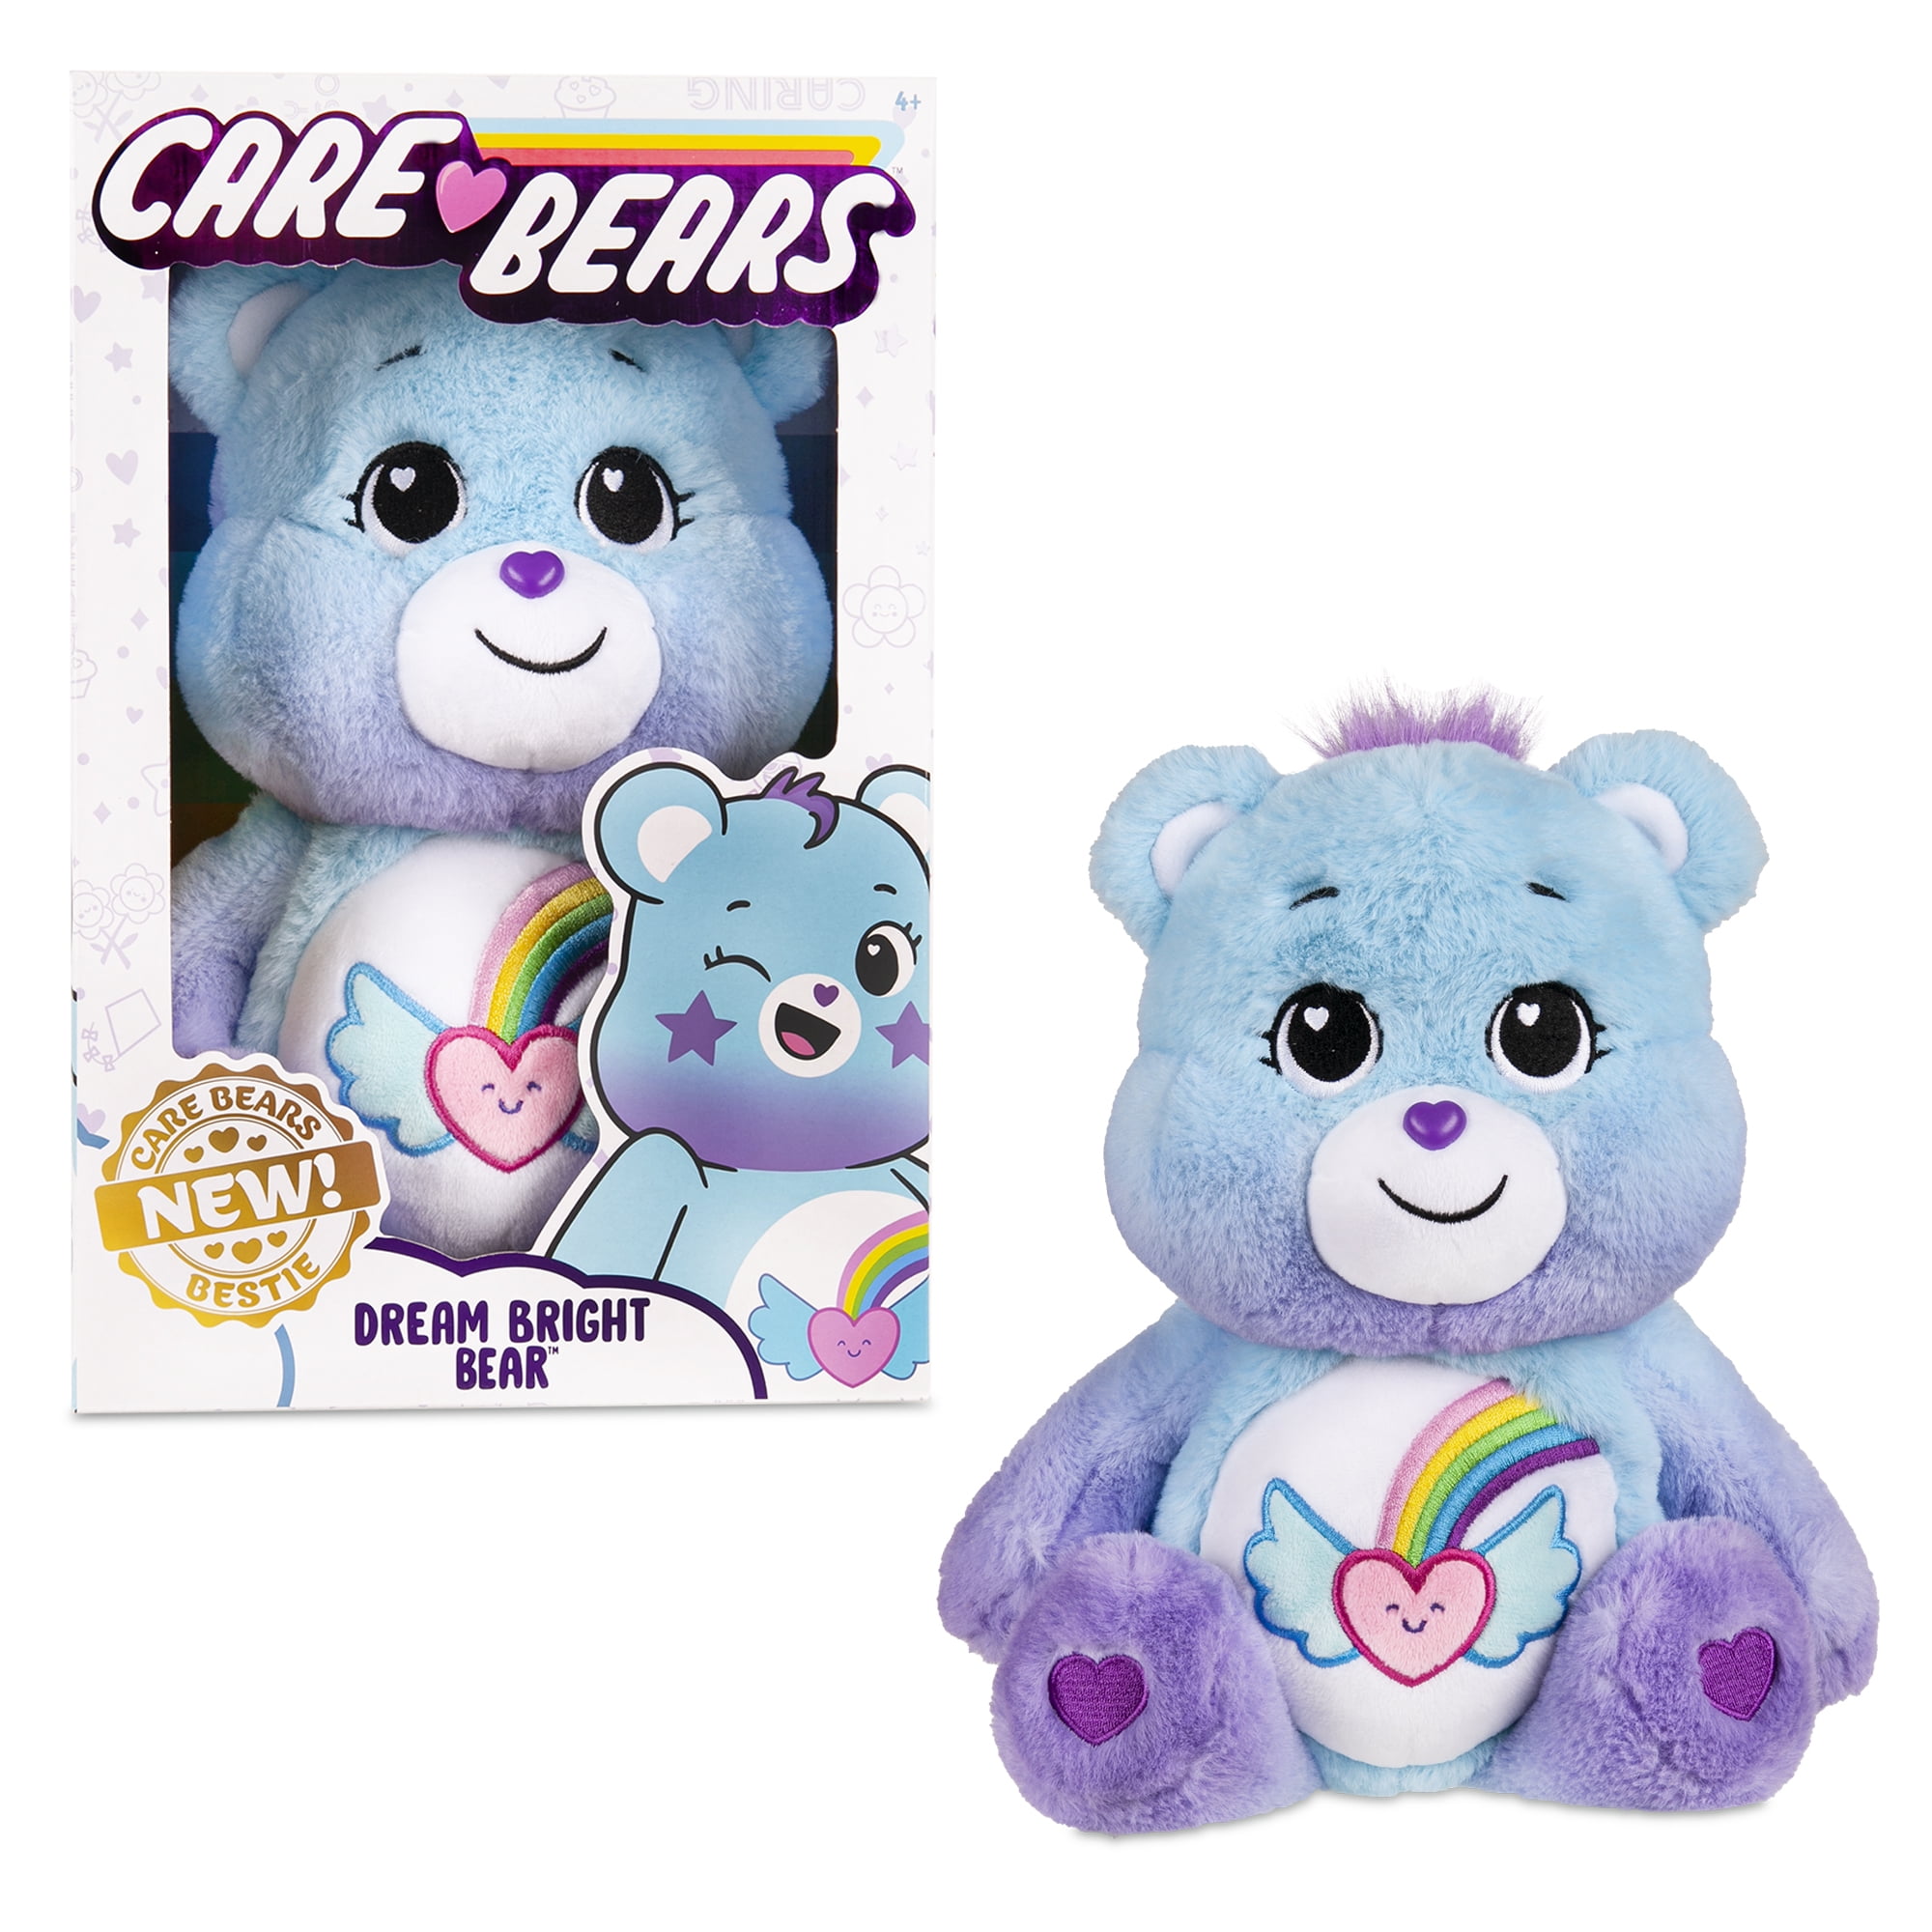 Soft Huggable Material. New 2021 Care Bears 14" Do-Your-Best Bear